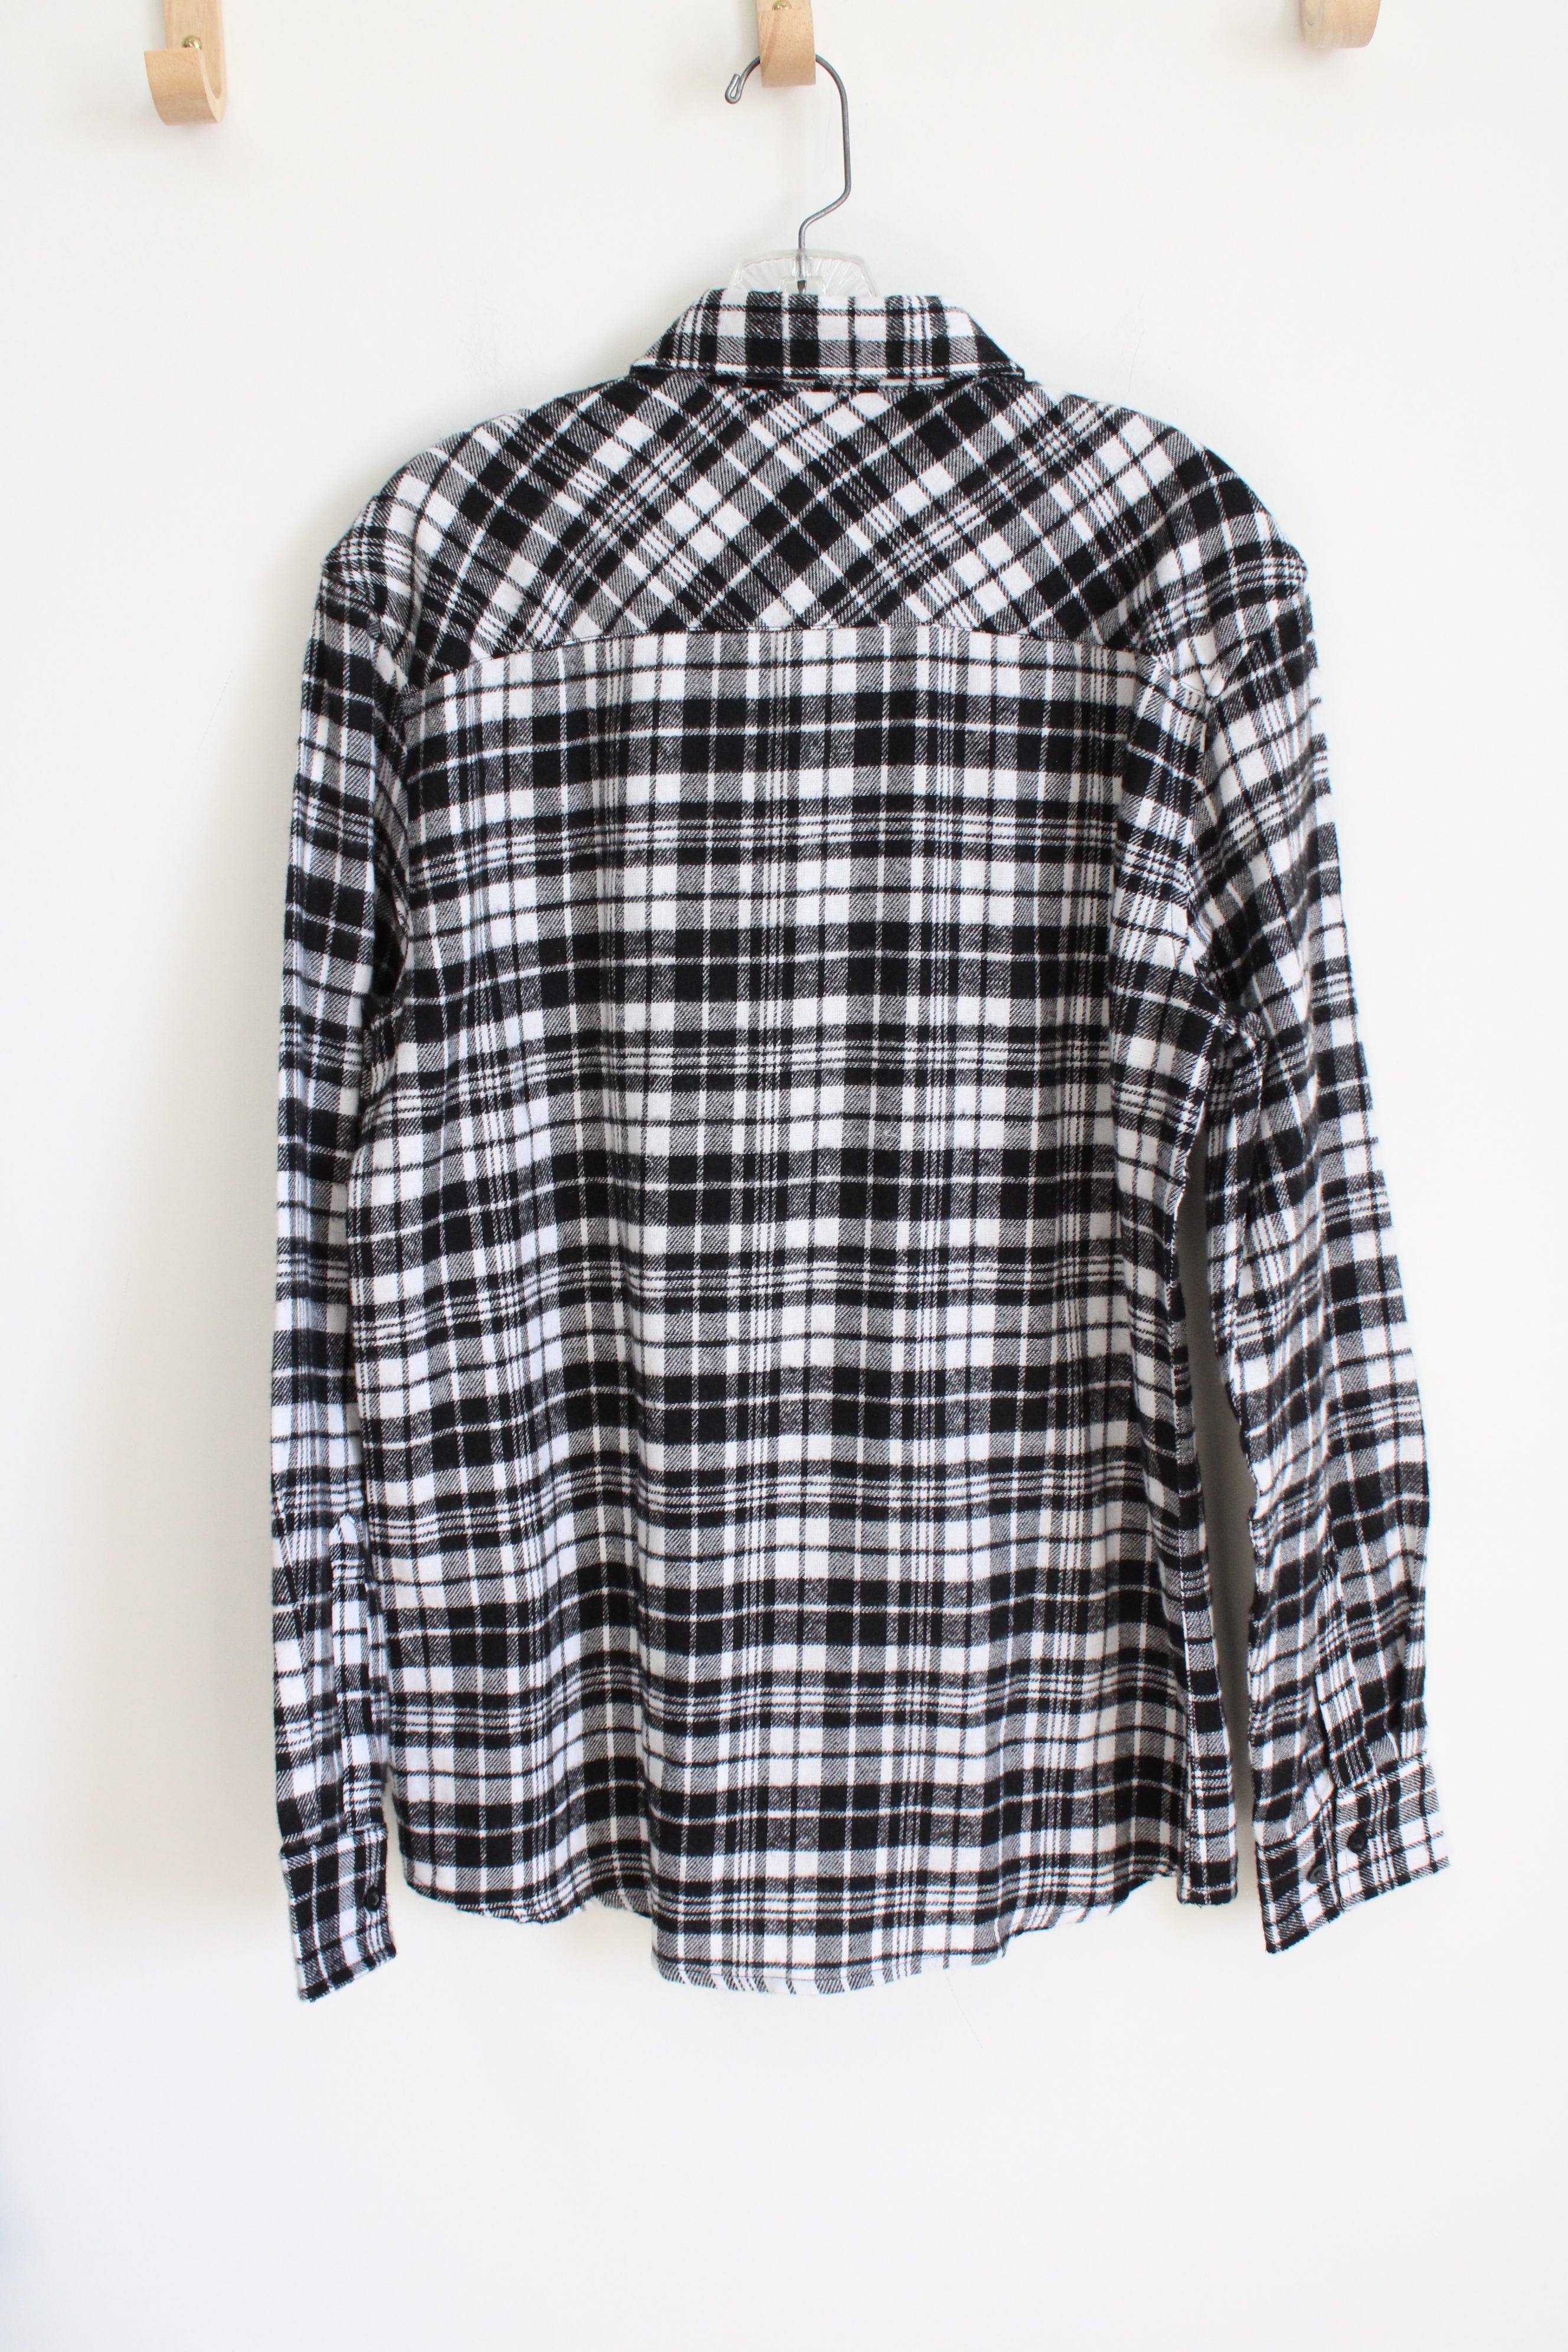 Rudolph Sportswear Black White Flannel Shirt | M